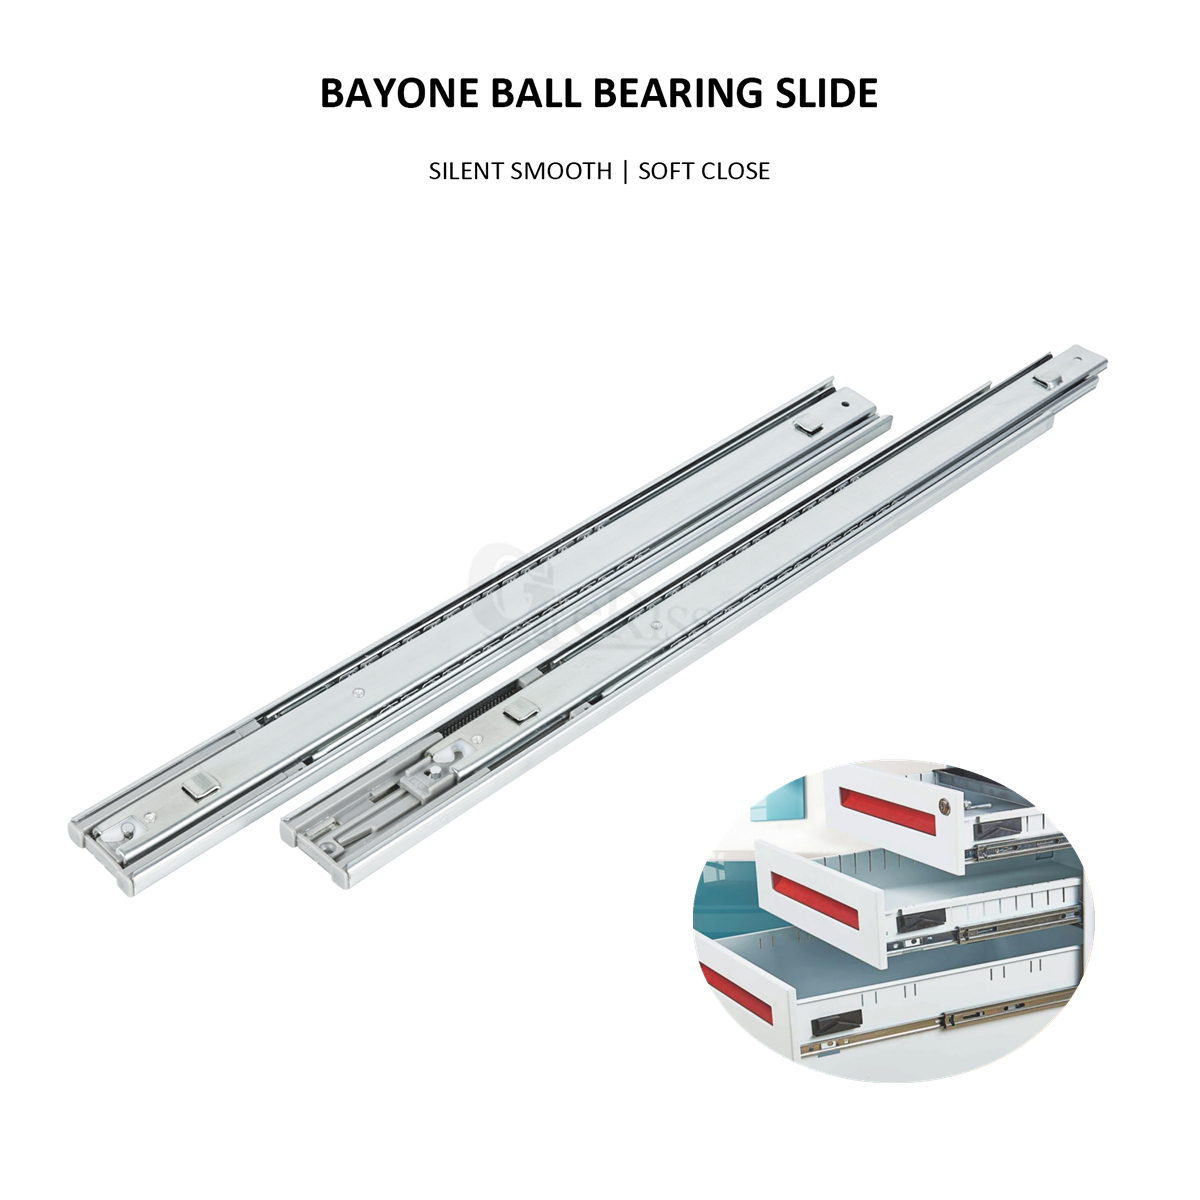 Bayonet Ball Bearing Slide